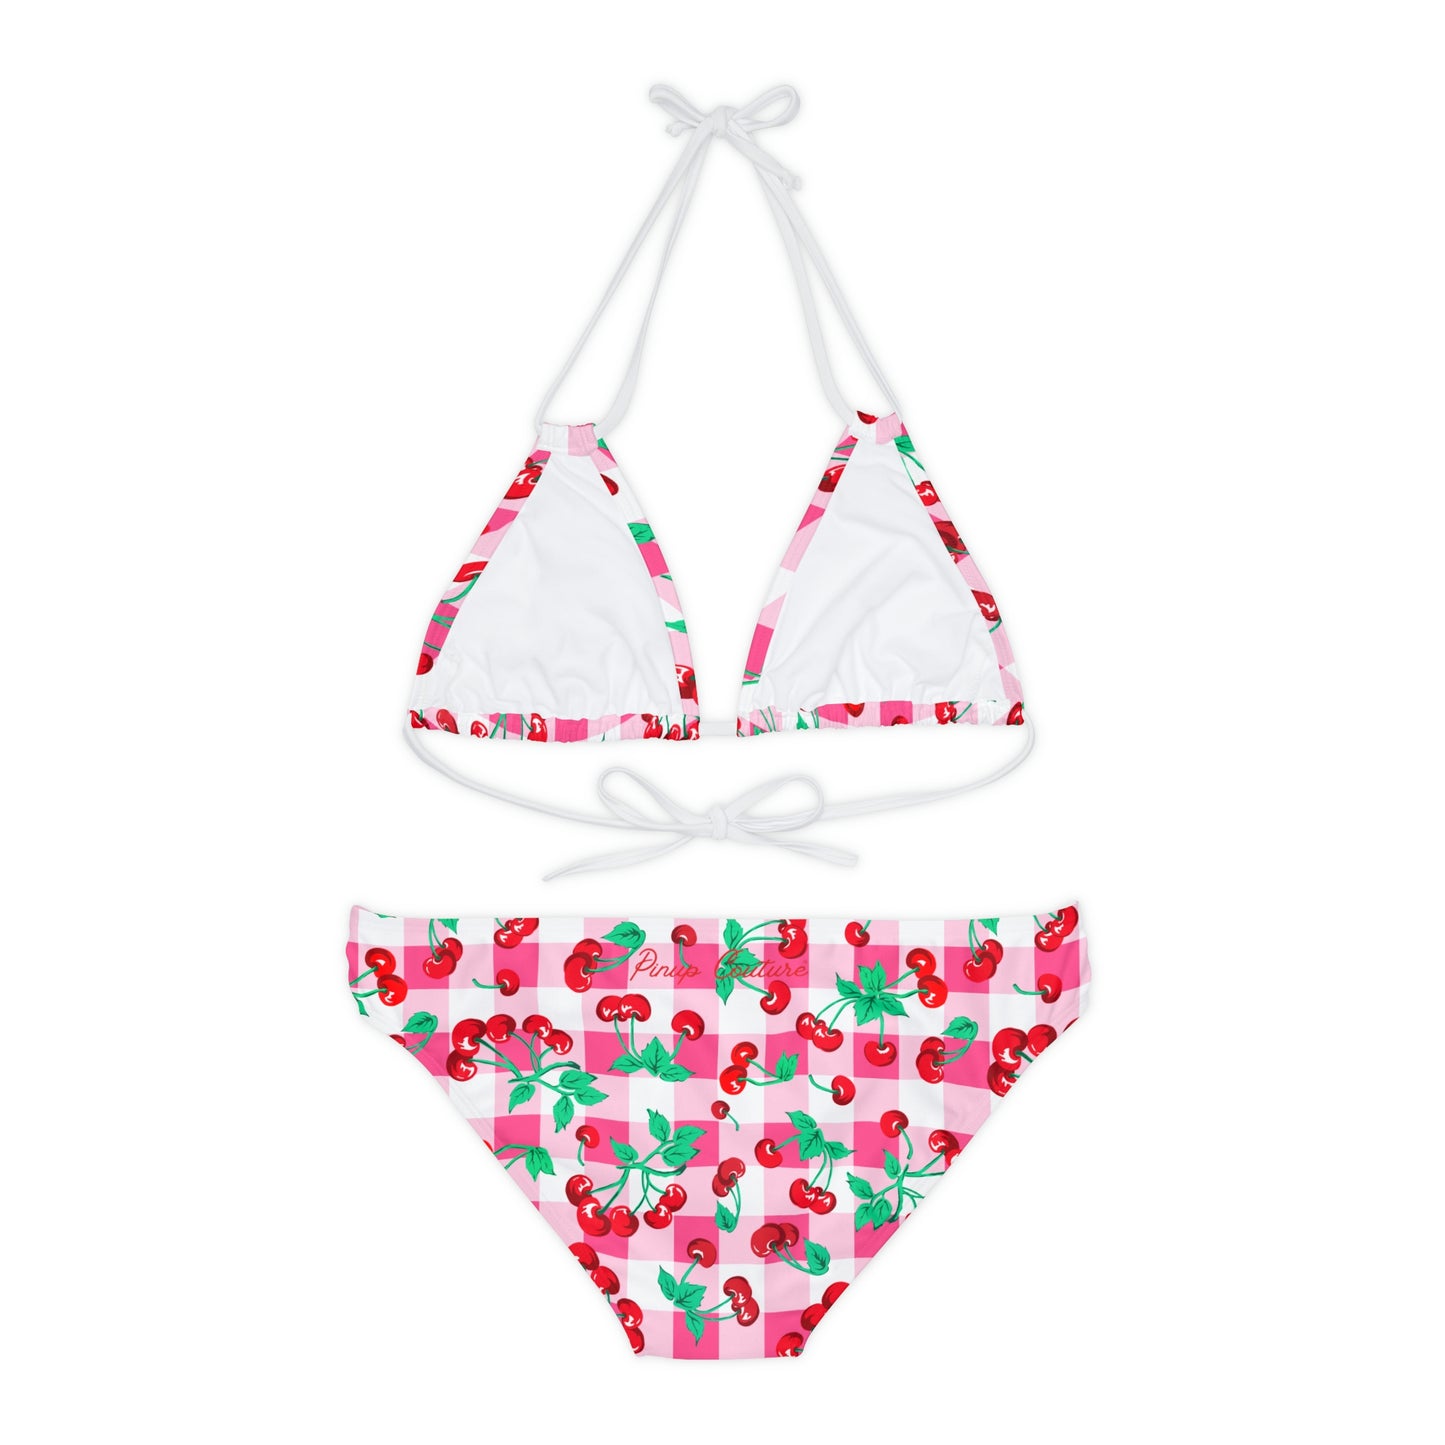 Alex Pink Vintage Gingham Cherry Print Strappy Bikini Set | Pinup Couture Swim